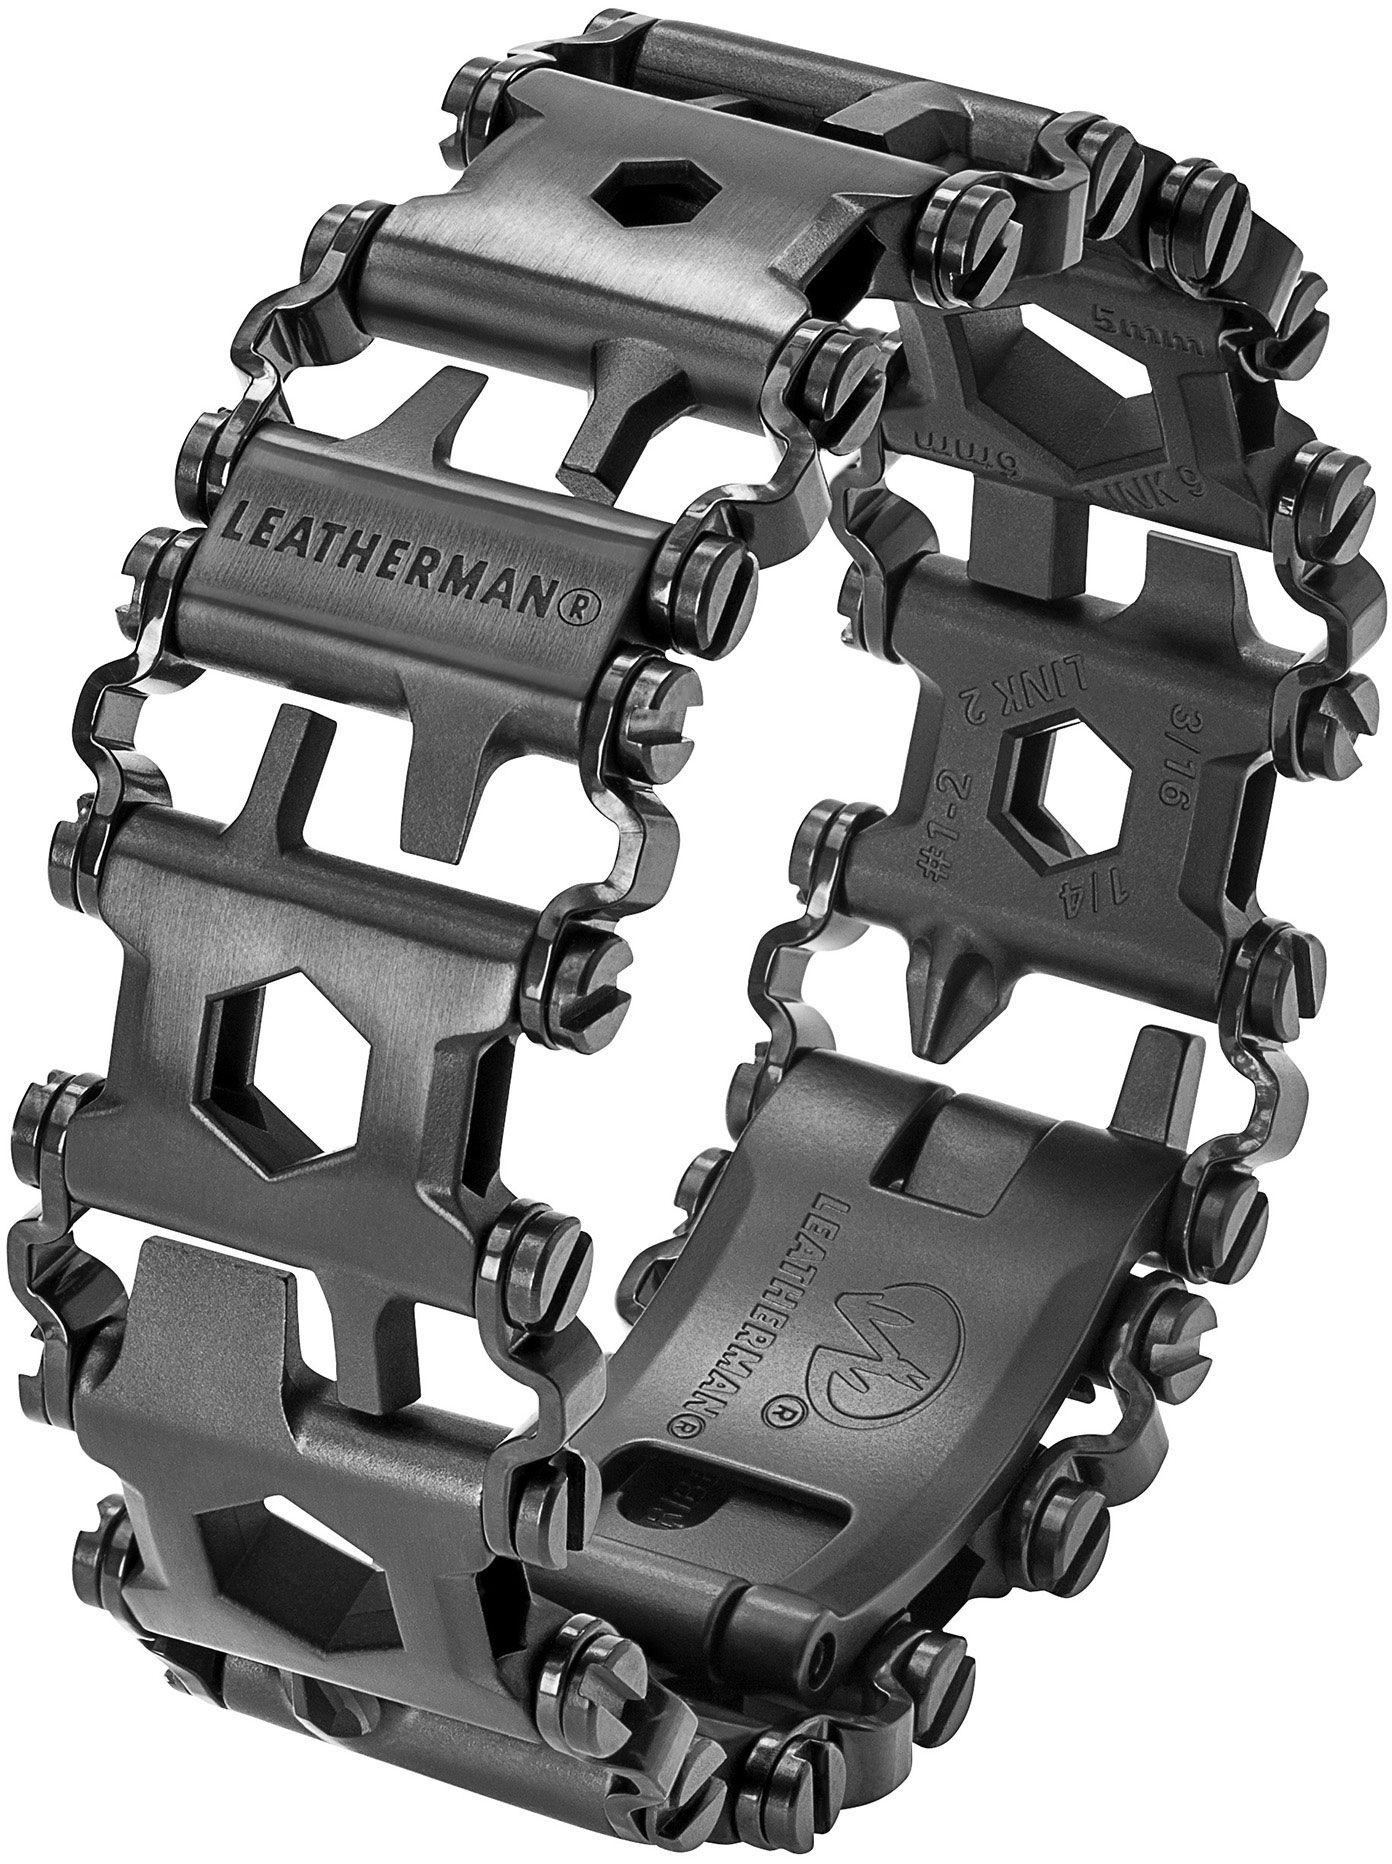 Leatherman Tread Bracelet Multi-Tool, Black - KnifeCenter - 831999 